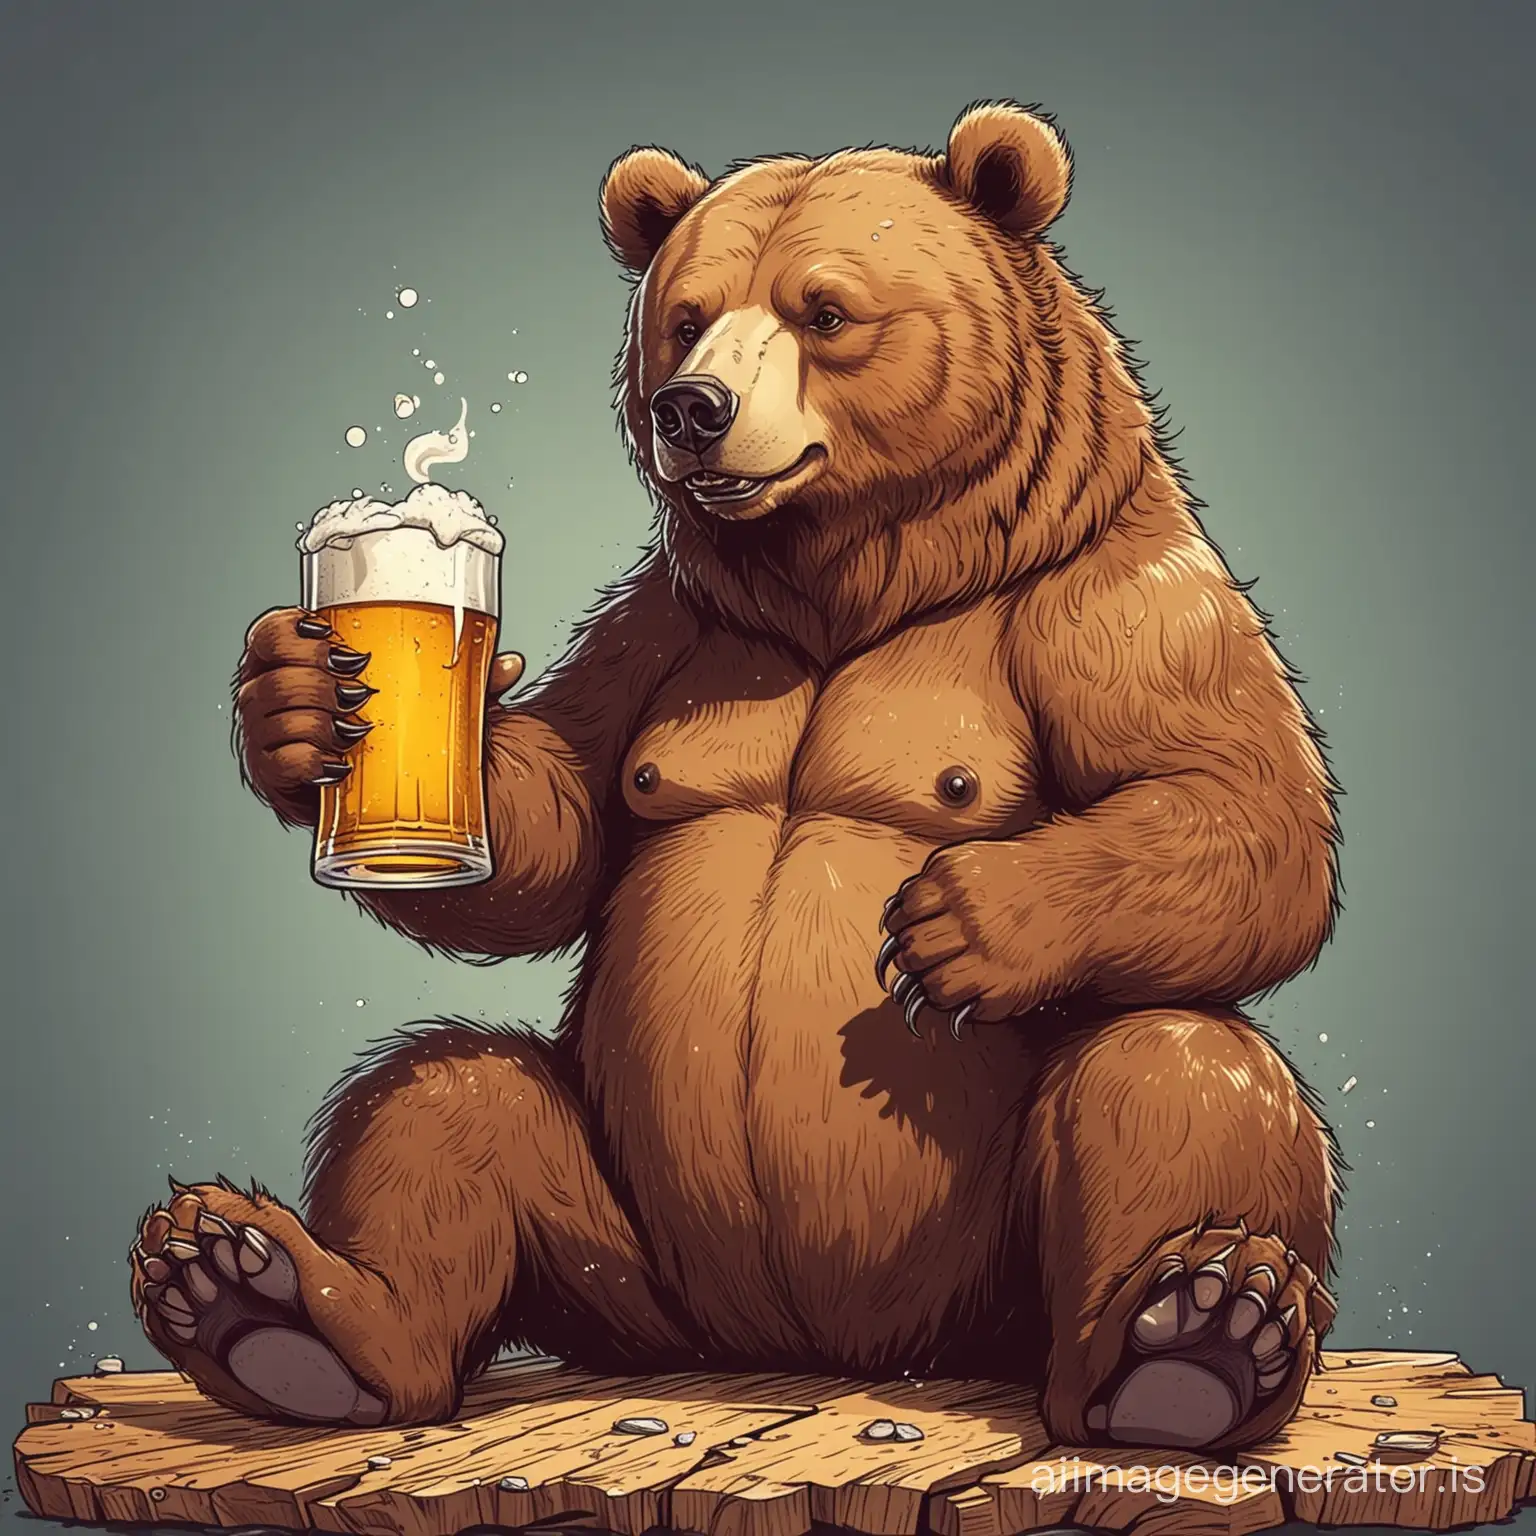 Comic-Style-Bear-Enjoying-a-Beer